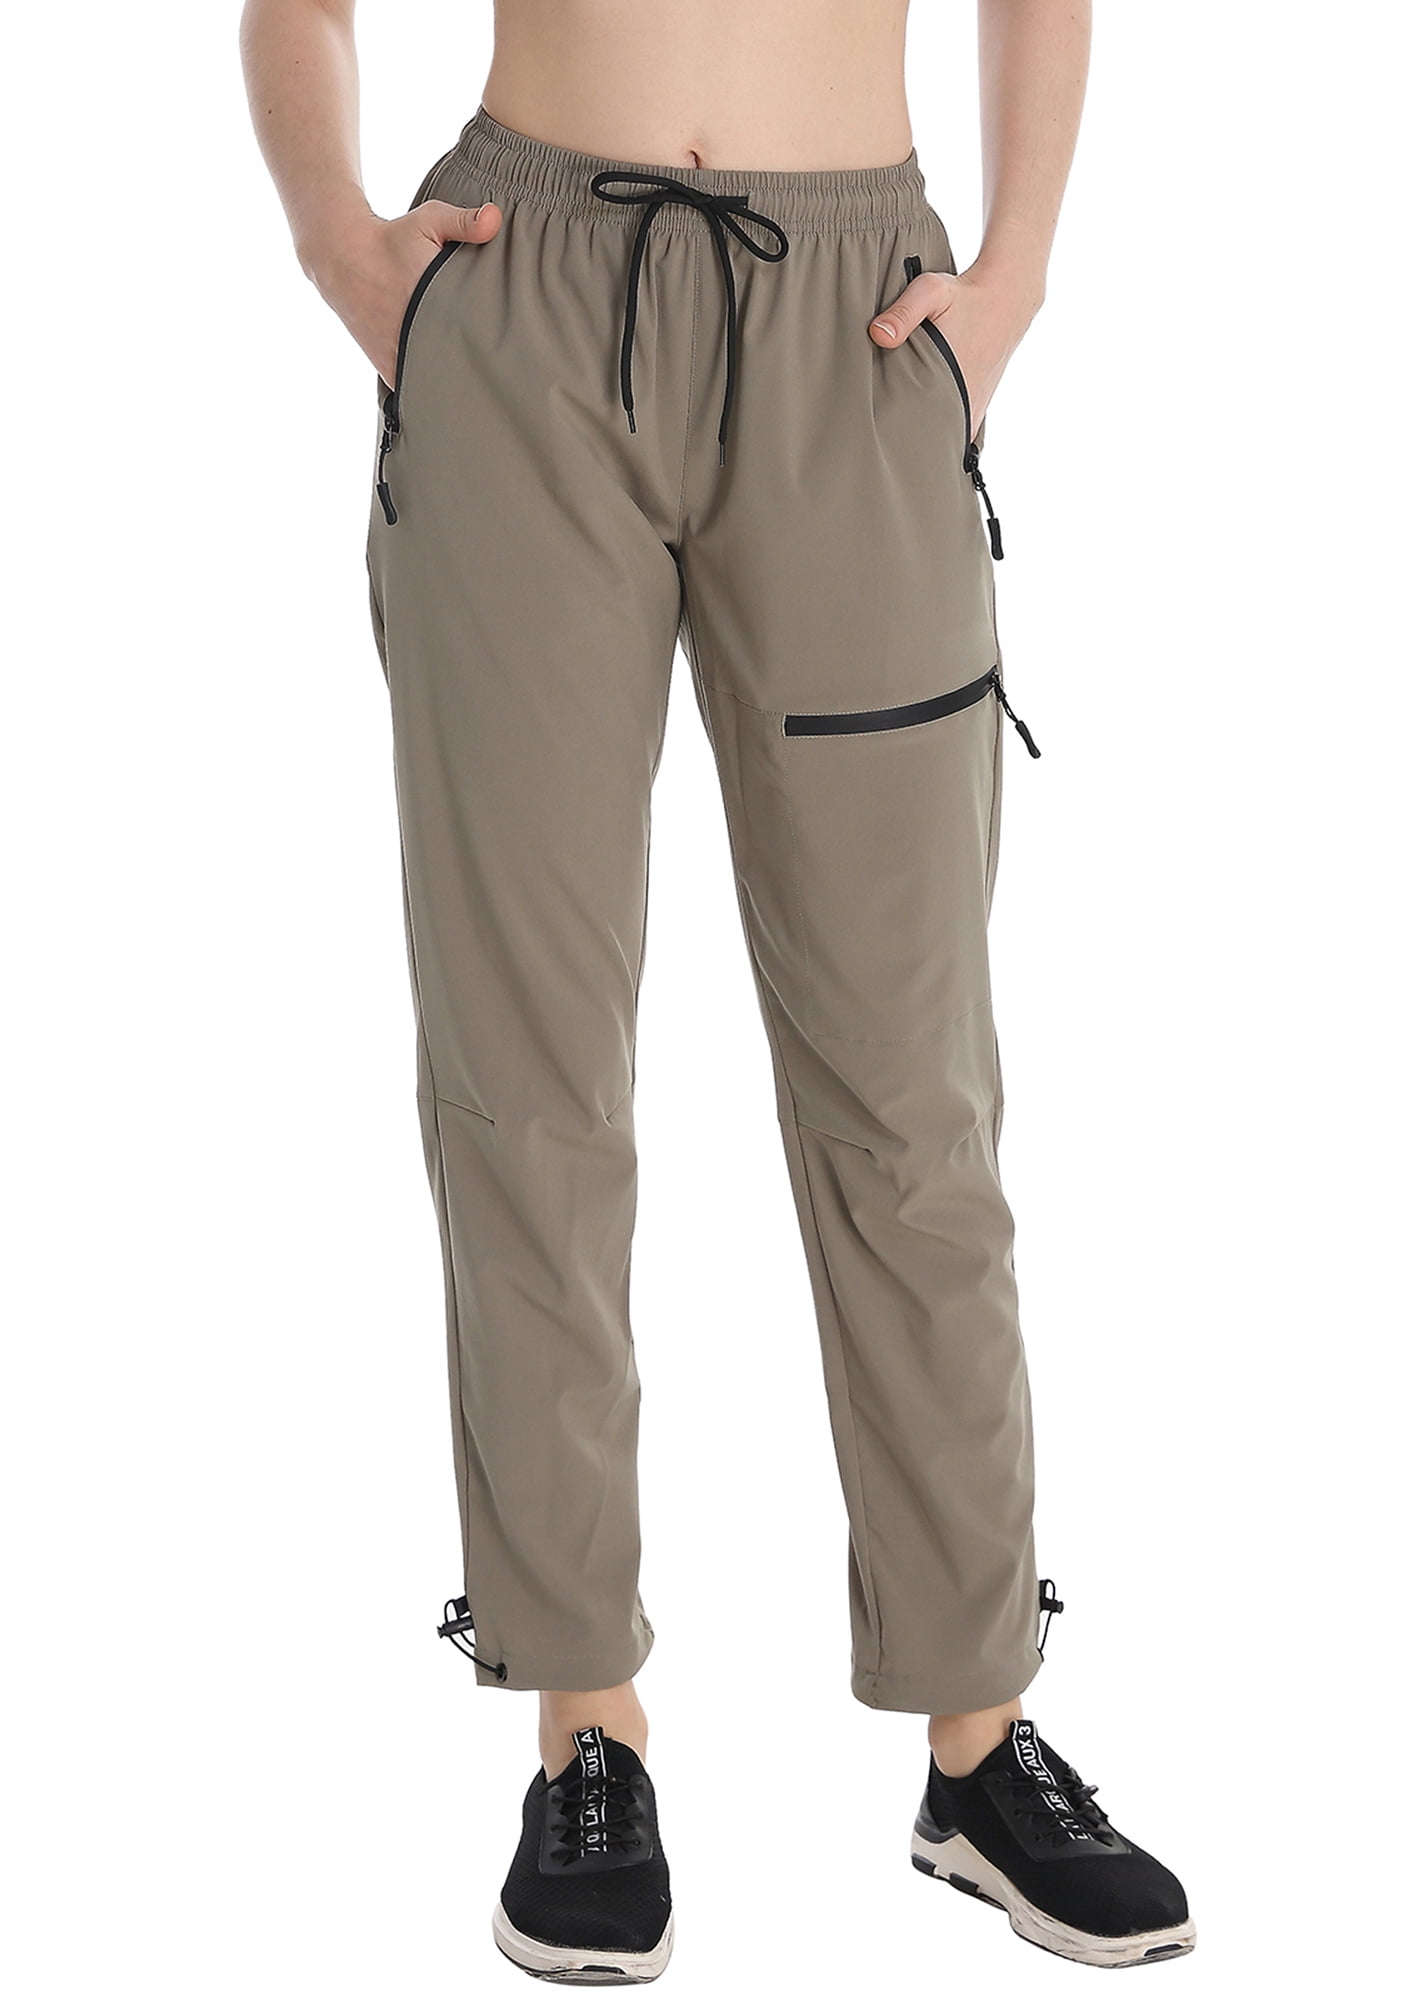 BALEAF Women's Hiking Pants Quick Dry Lightweight Elastic Waist Sz